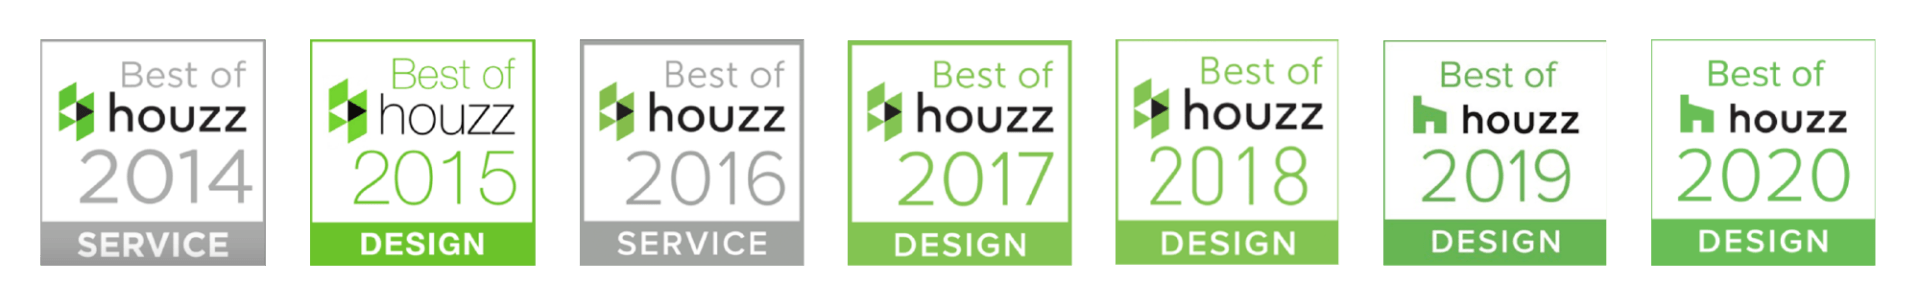 Best of Houzz Awards for Design & Service